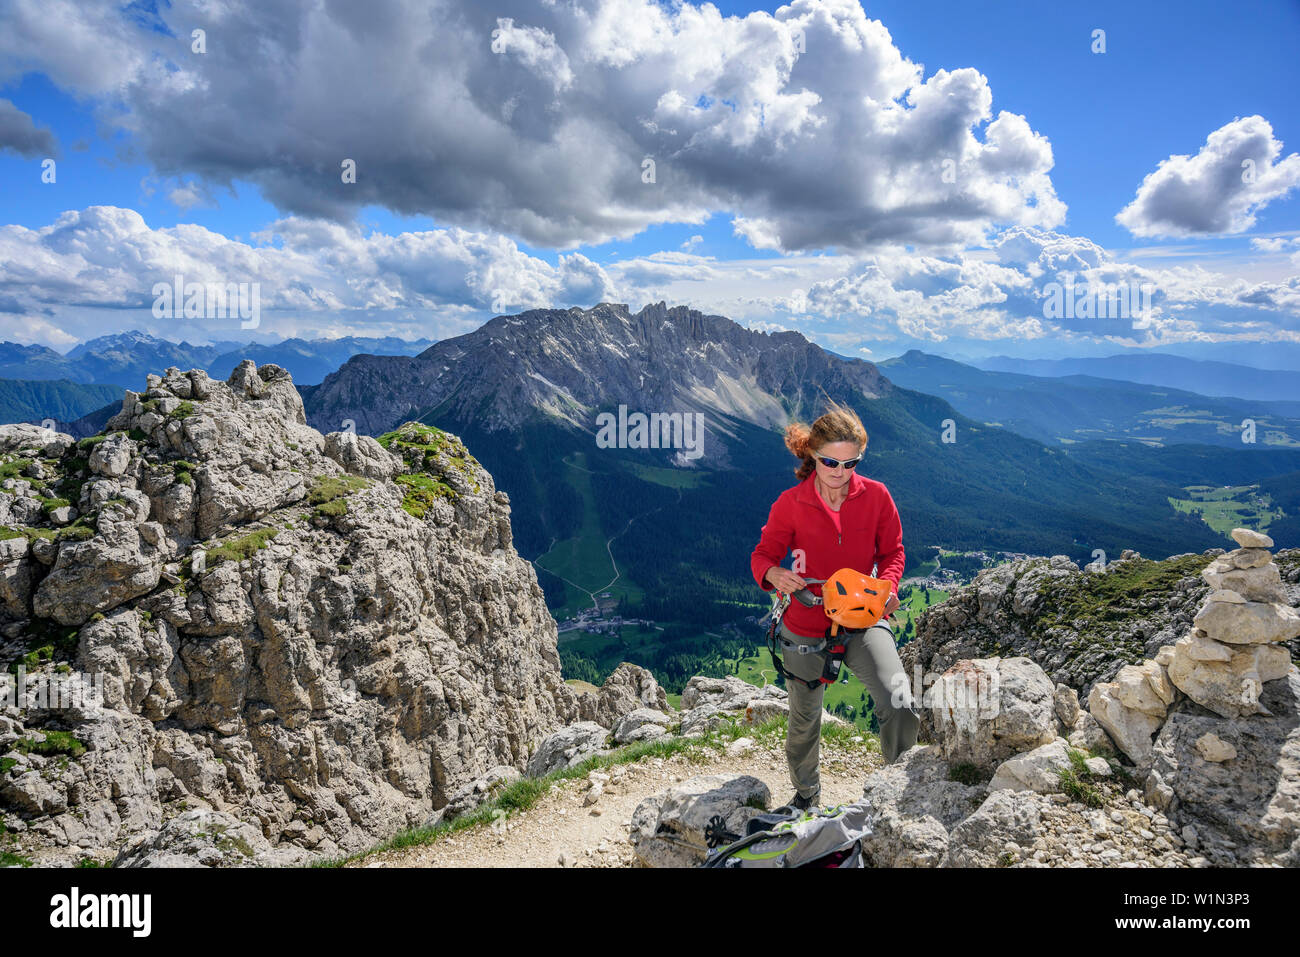 Woman putting on casque d'escalade, route de corde fixe, Masare Masare, Rotwand, Rosengarten, UNESCO World Heritage Dolomites, Dolomites, Trentin, Italie Banque D'Images